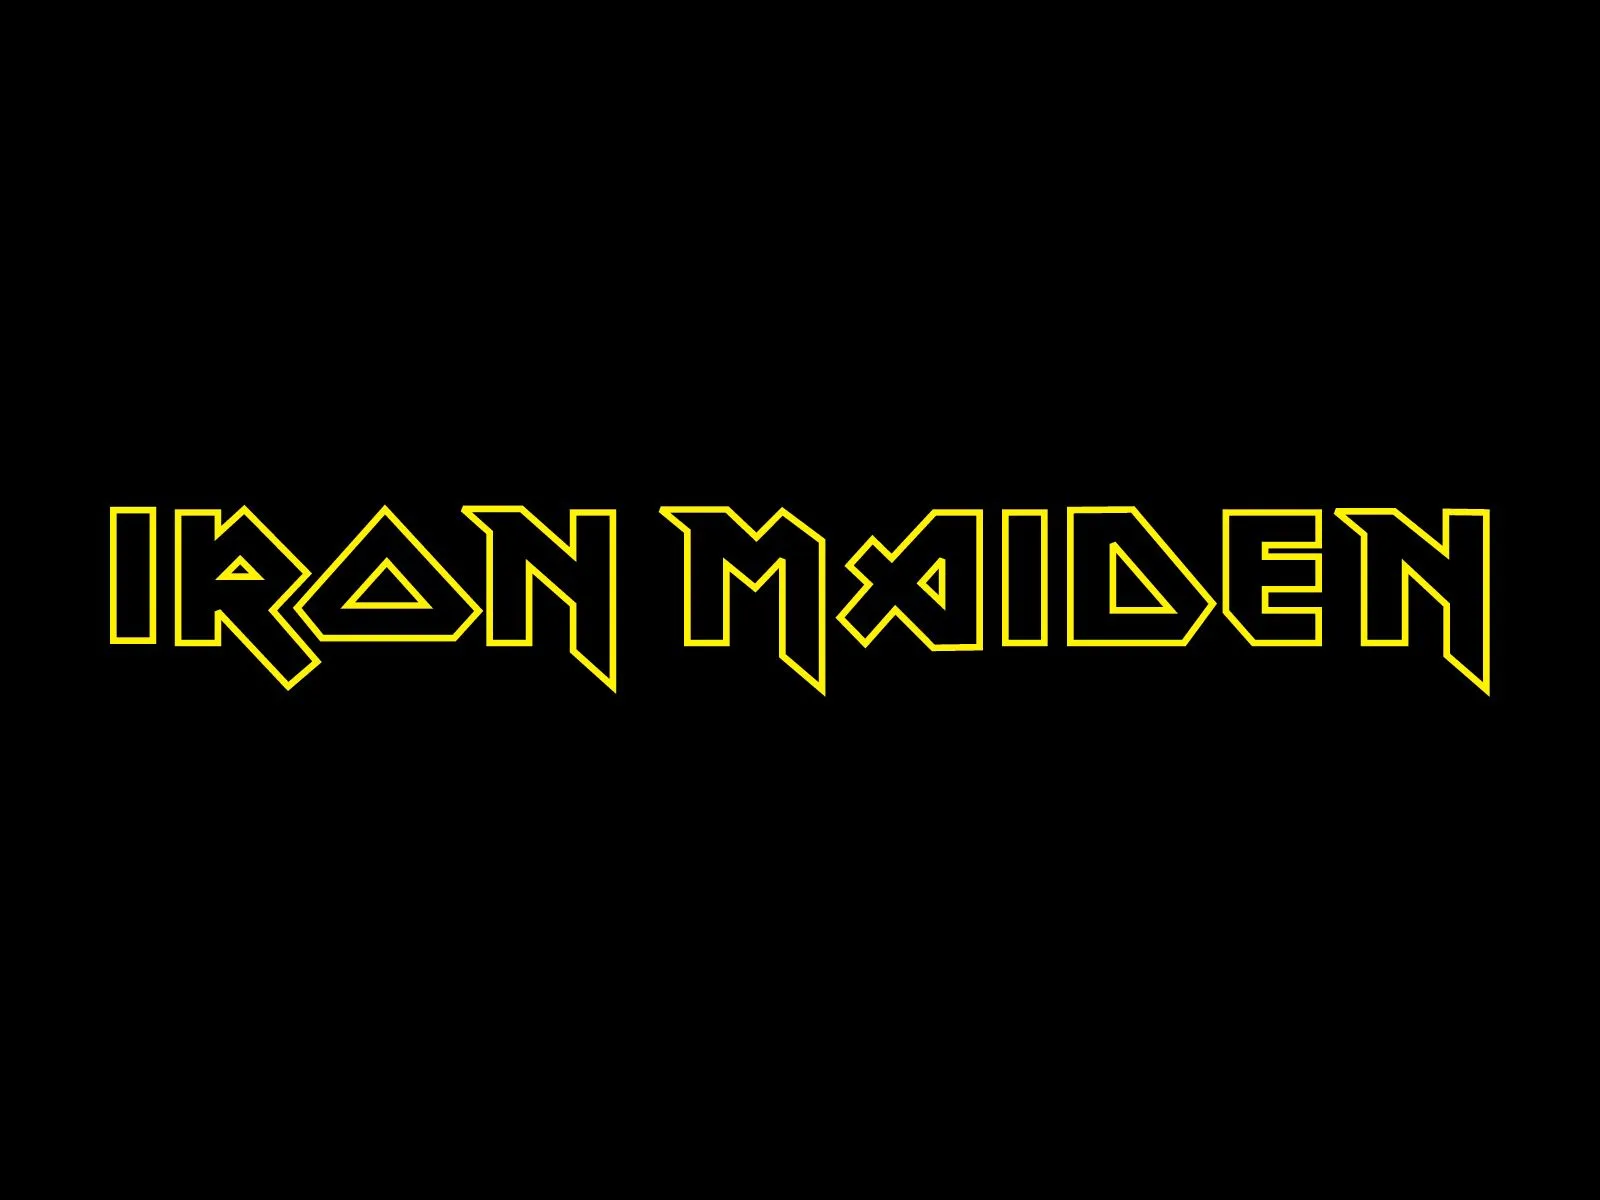 Iron Maiden logo | Band logos - Rock band logos, metal bands logos ...